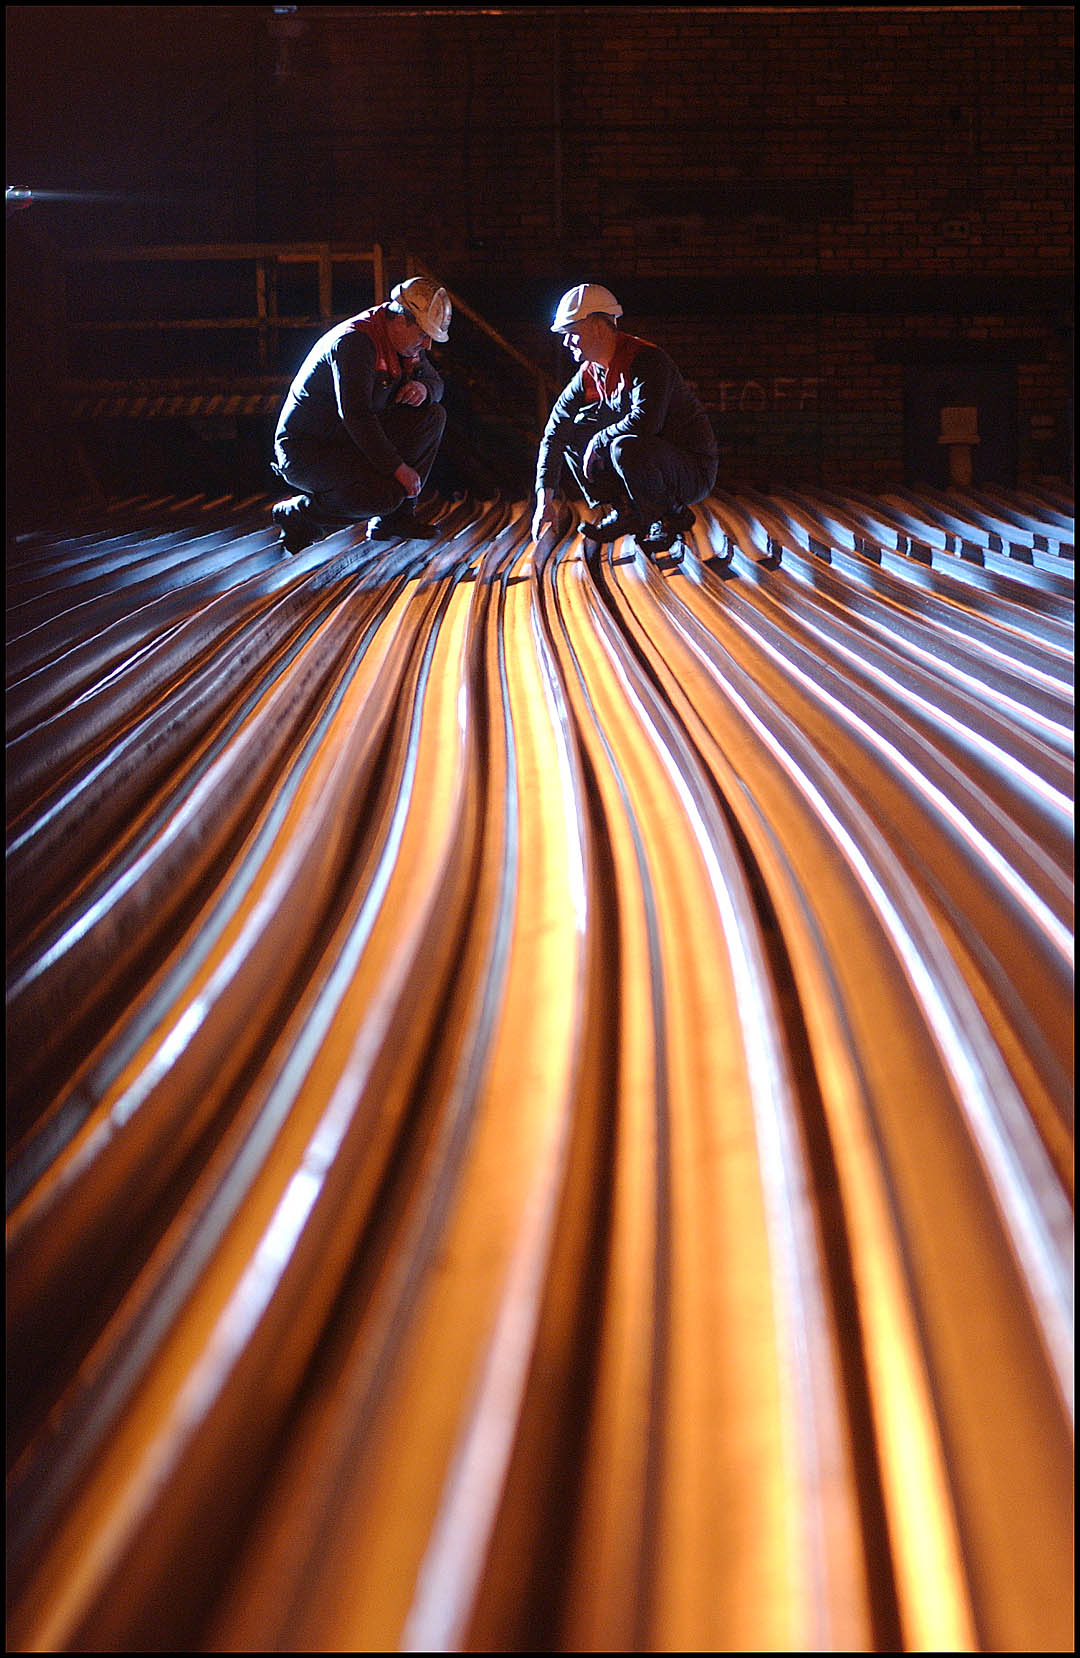 Commercial Photographer: Steel Manufacture, Railway Rails, Workington, England, UK